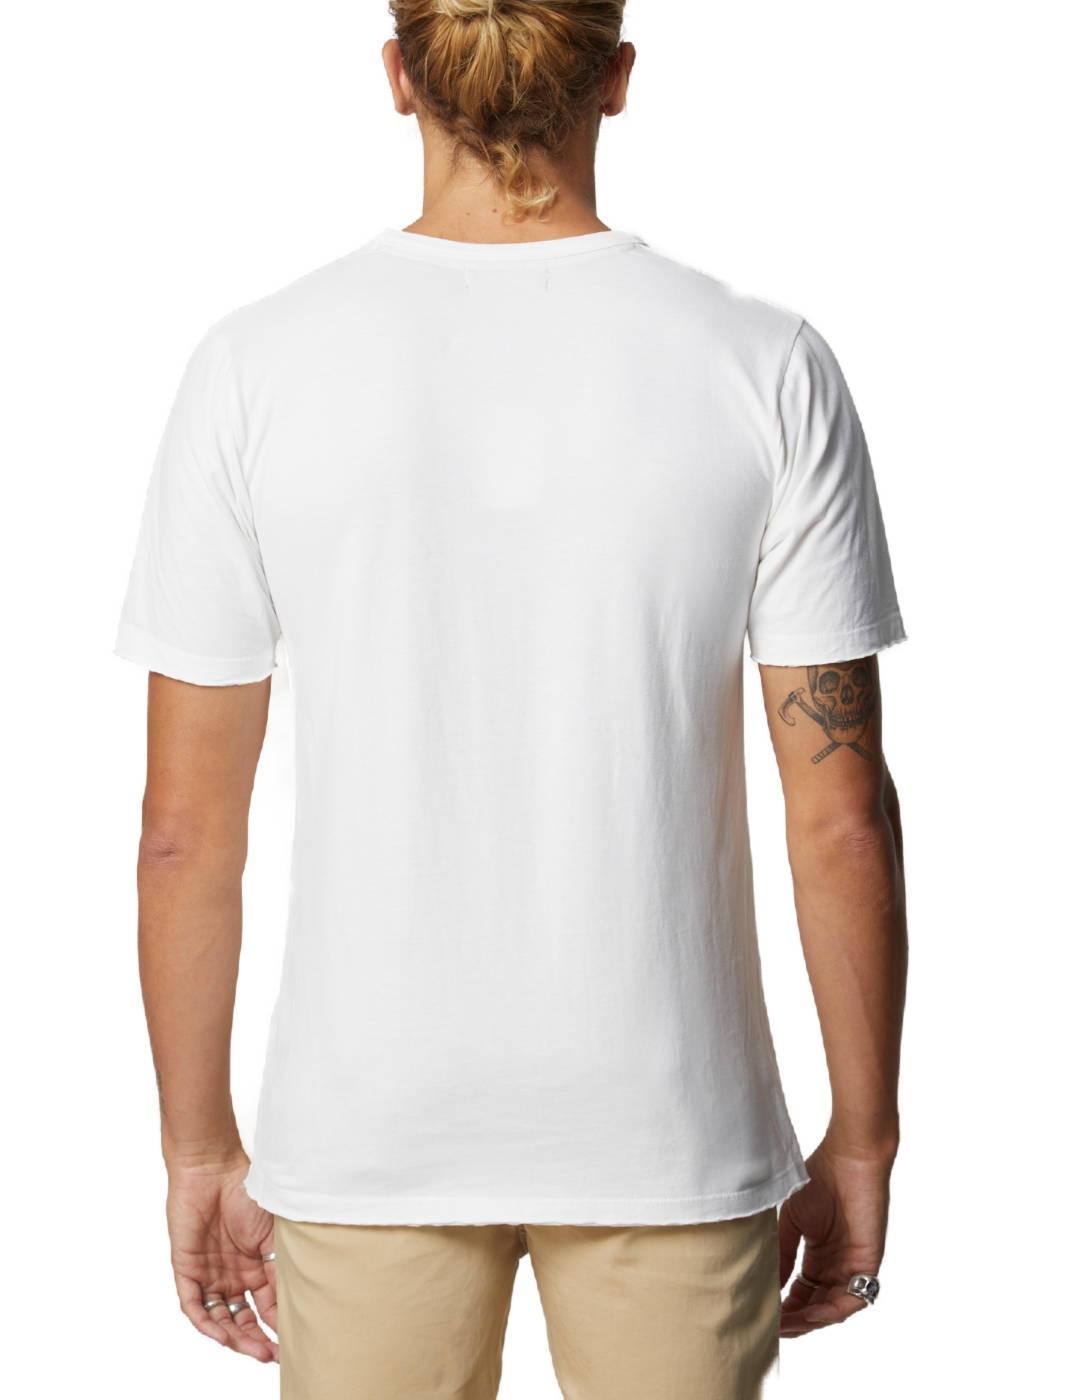 Camiseta Altona blanca logo azul manga corta para hombre